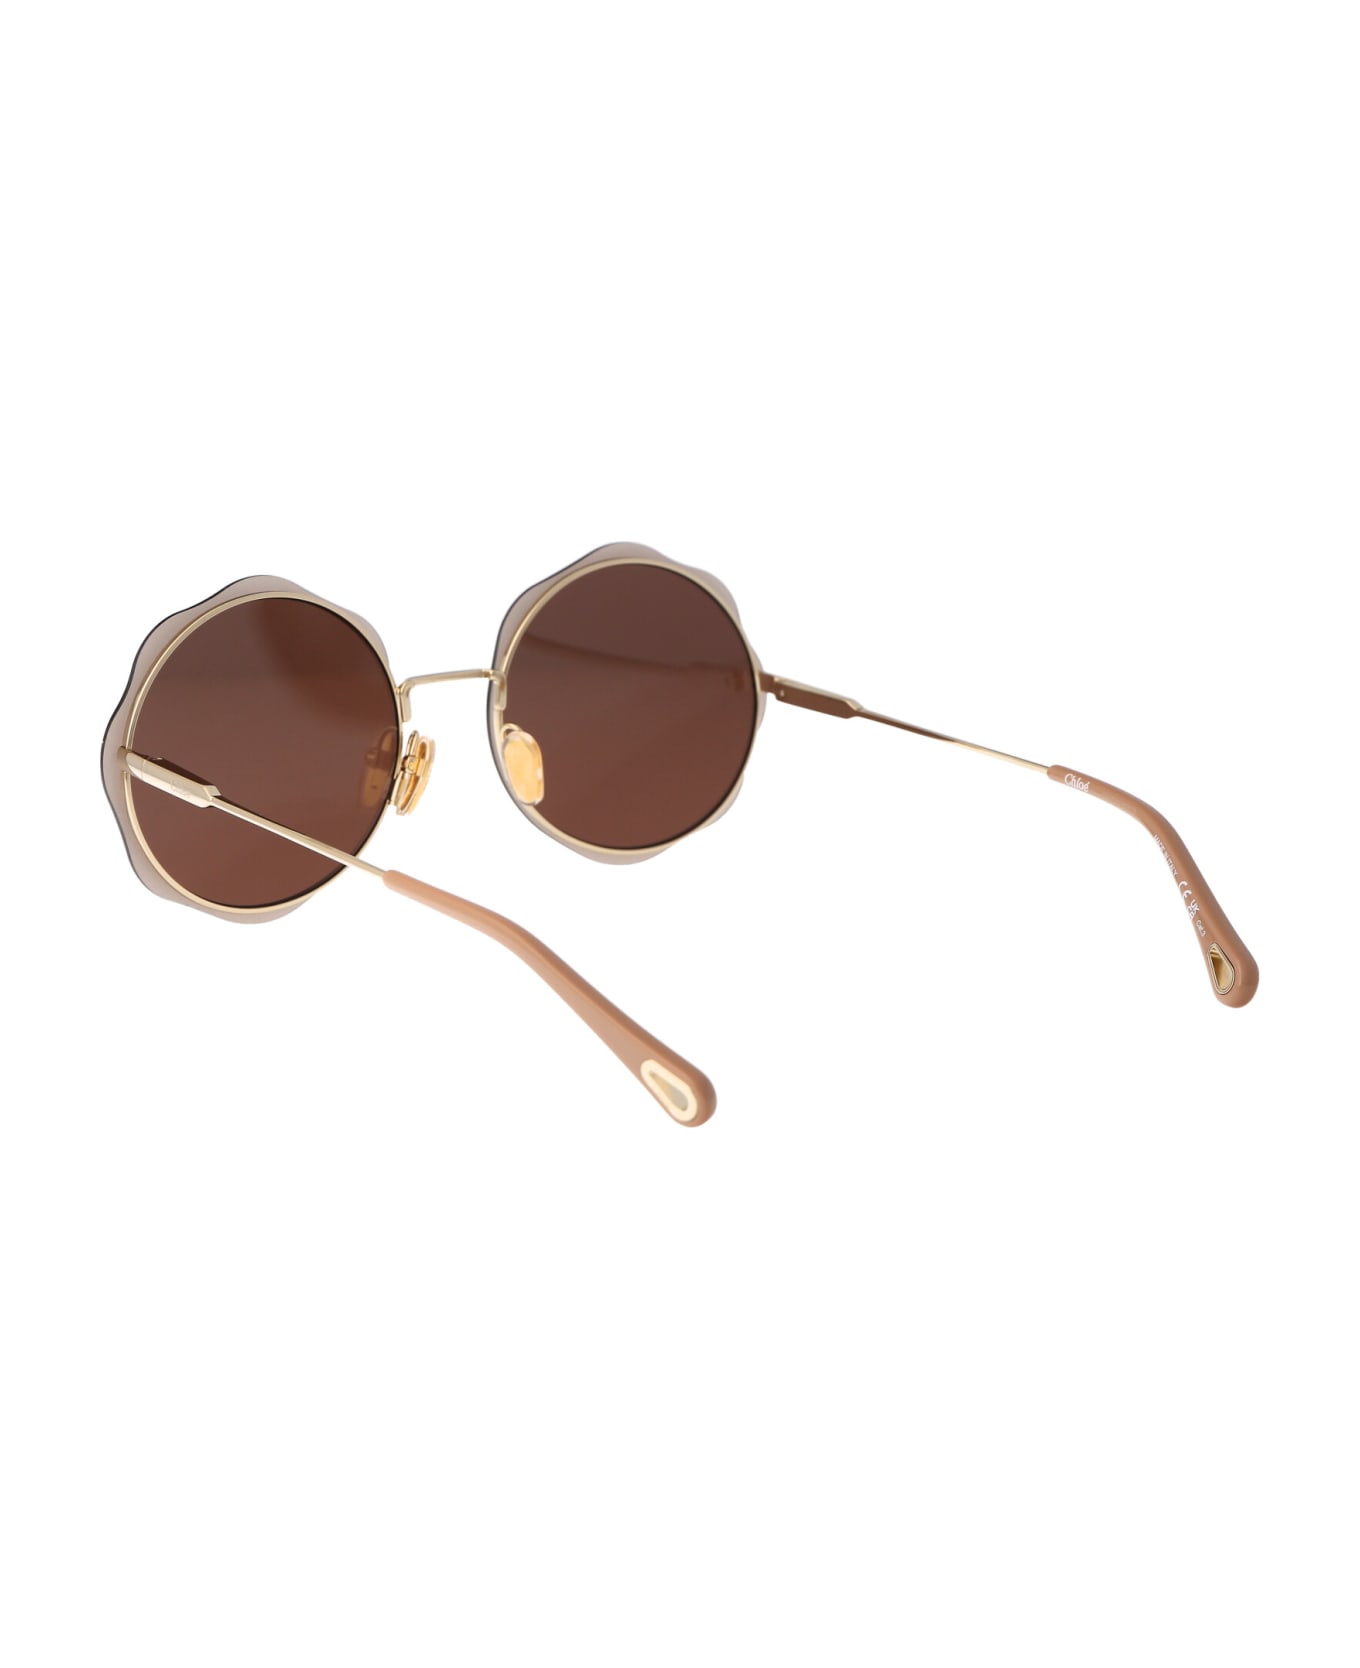 Chloé Eyewear Ch0202s Sunglasses - 004 GOLD GOLD BROWN